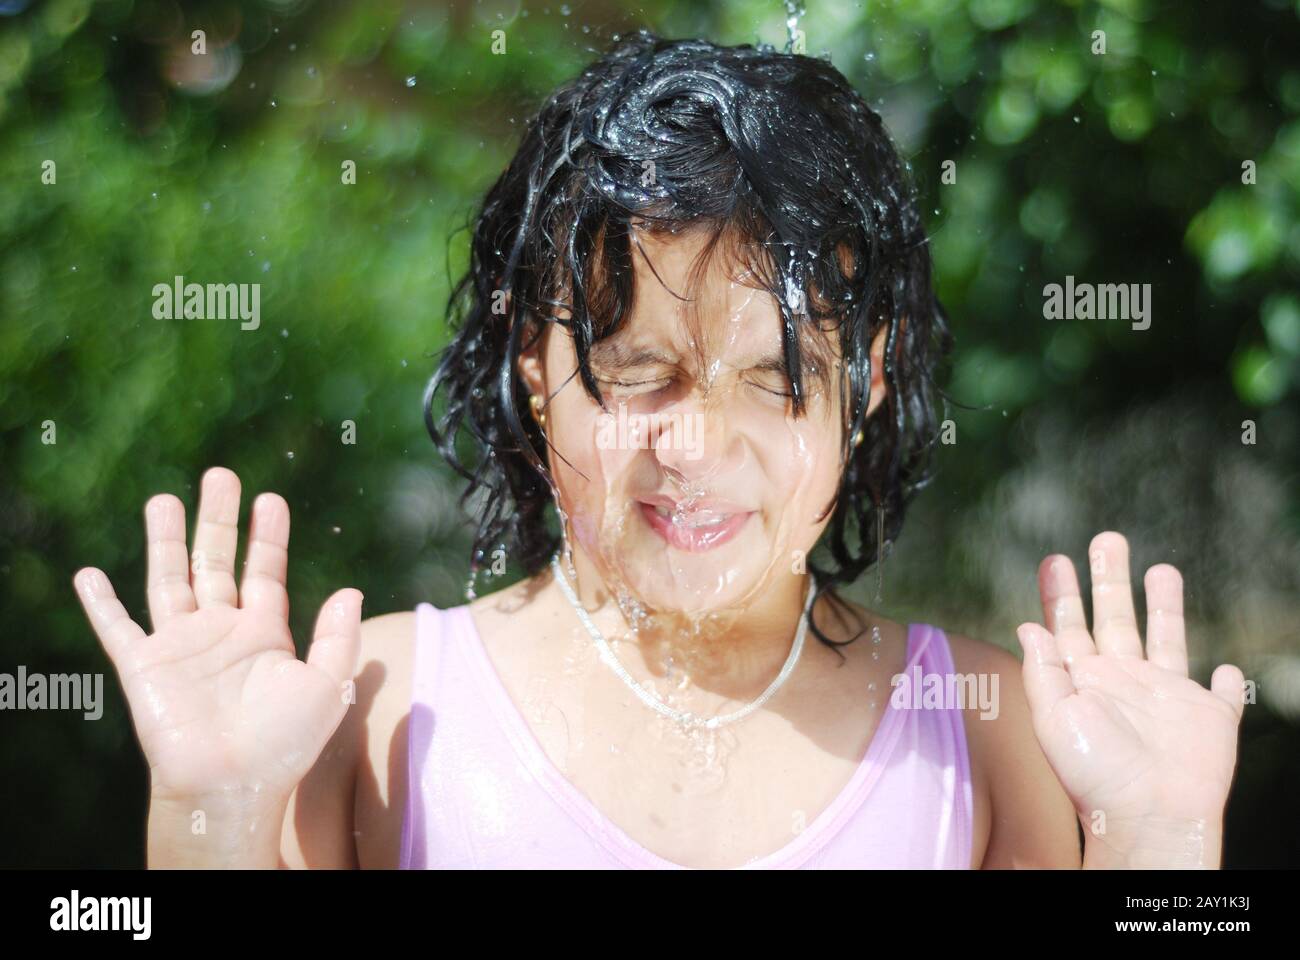 Little girl splashing with water in hot summertime Stock Photo